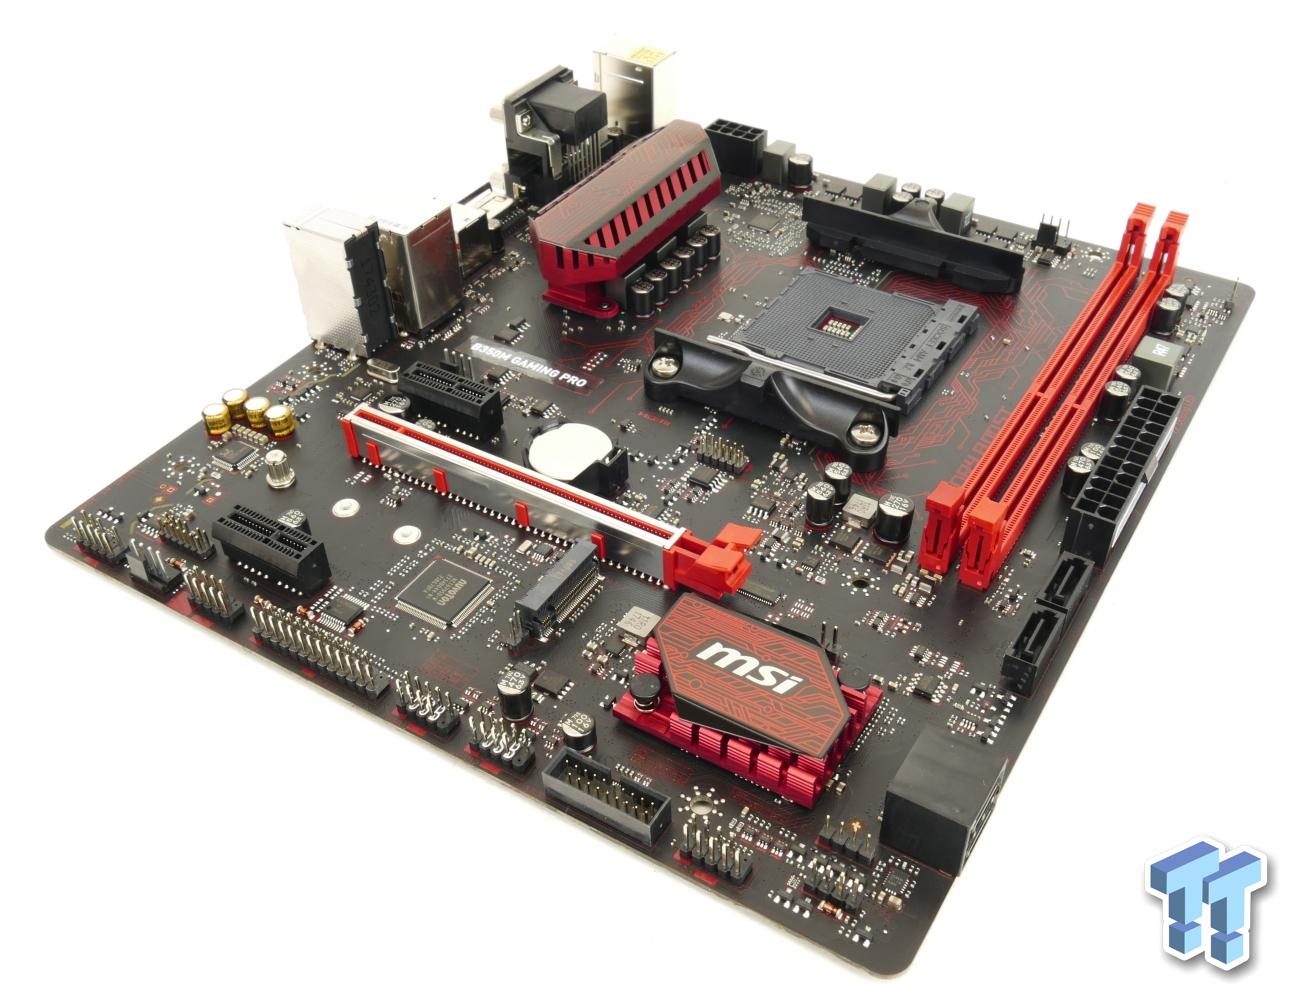 MSI B350M Gaming Pro (AMD B350) Motherboard Review